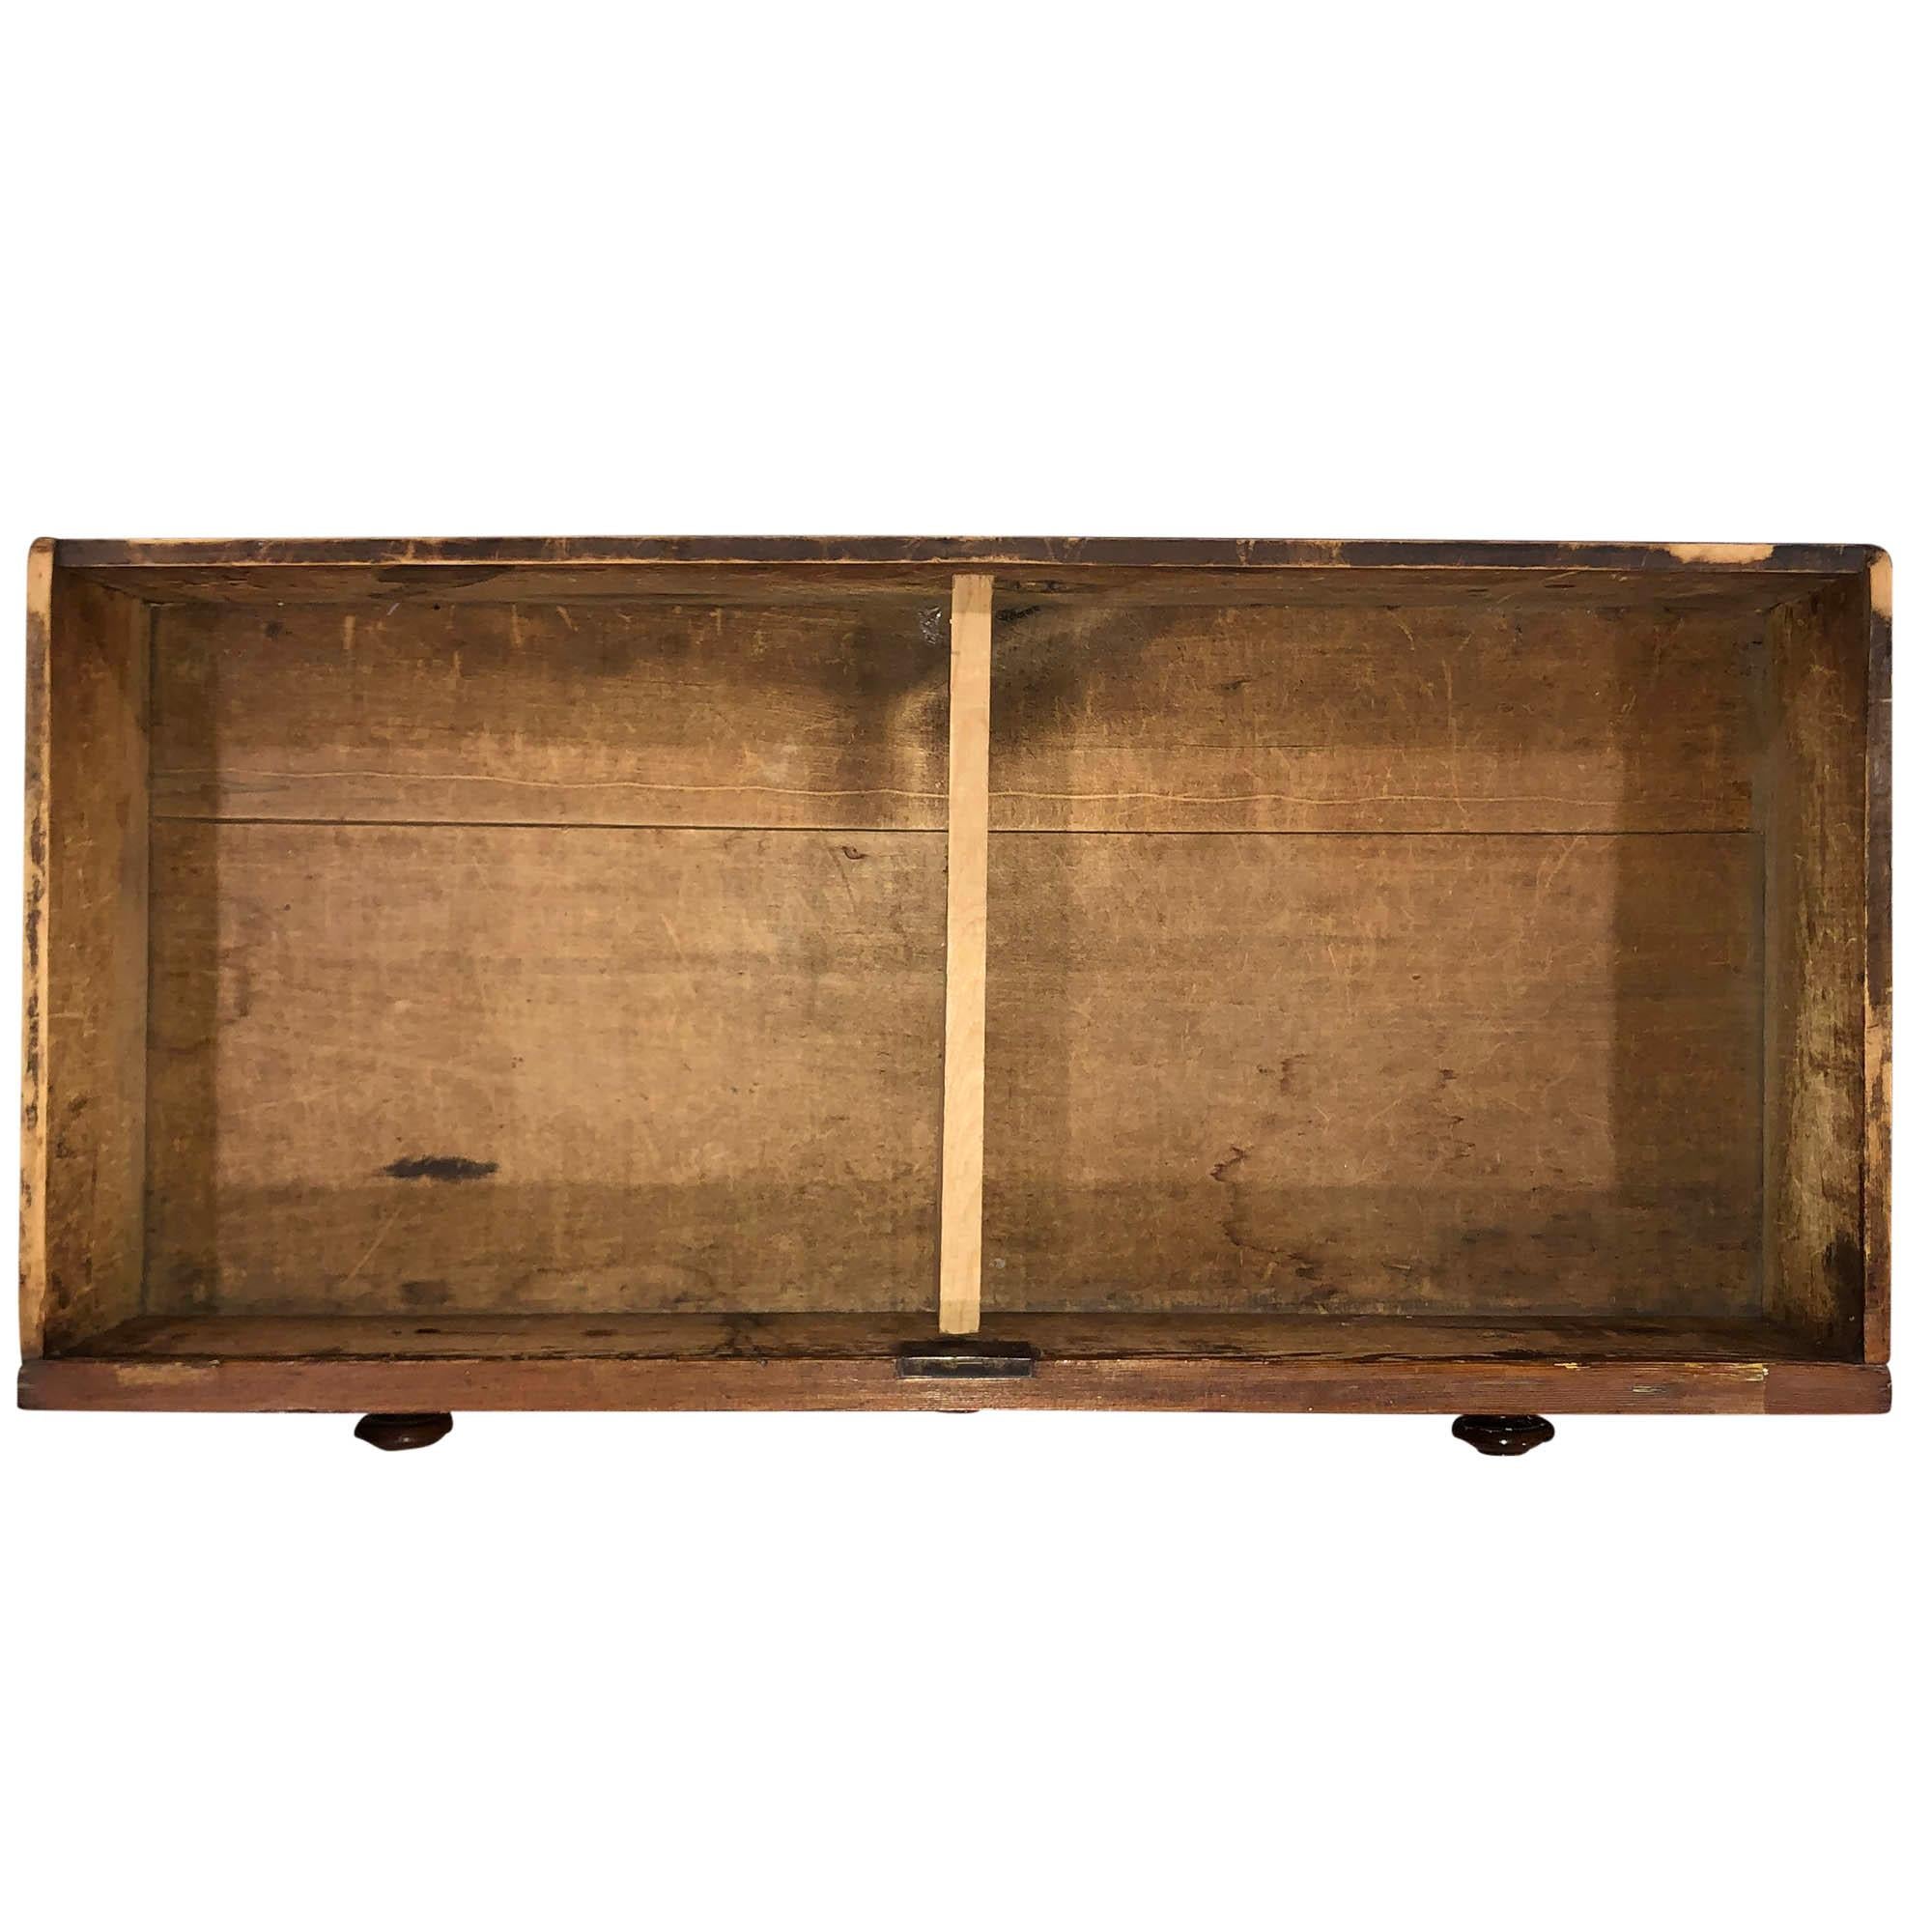 Antique Eastlake Solid Wood Dresser with Black Accents For Sale 2